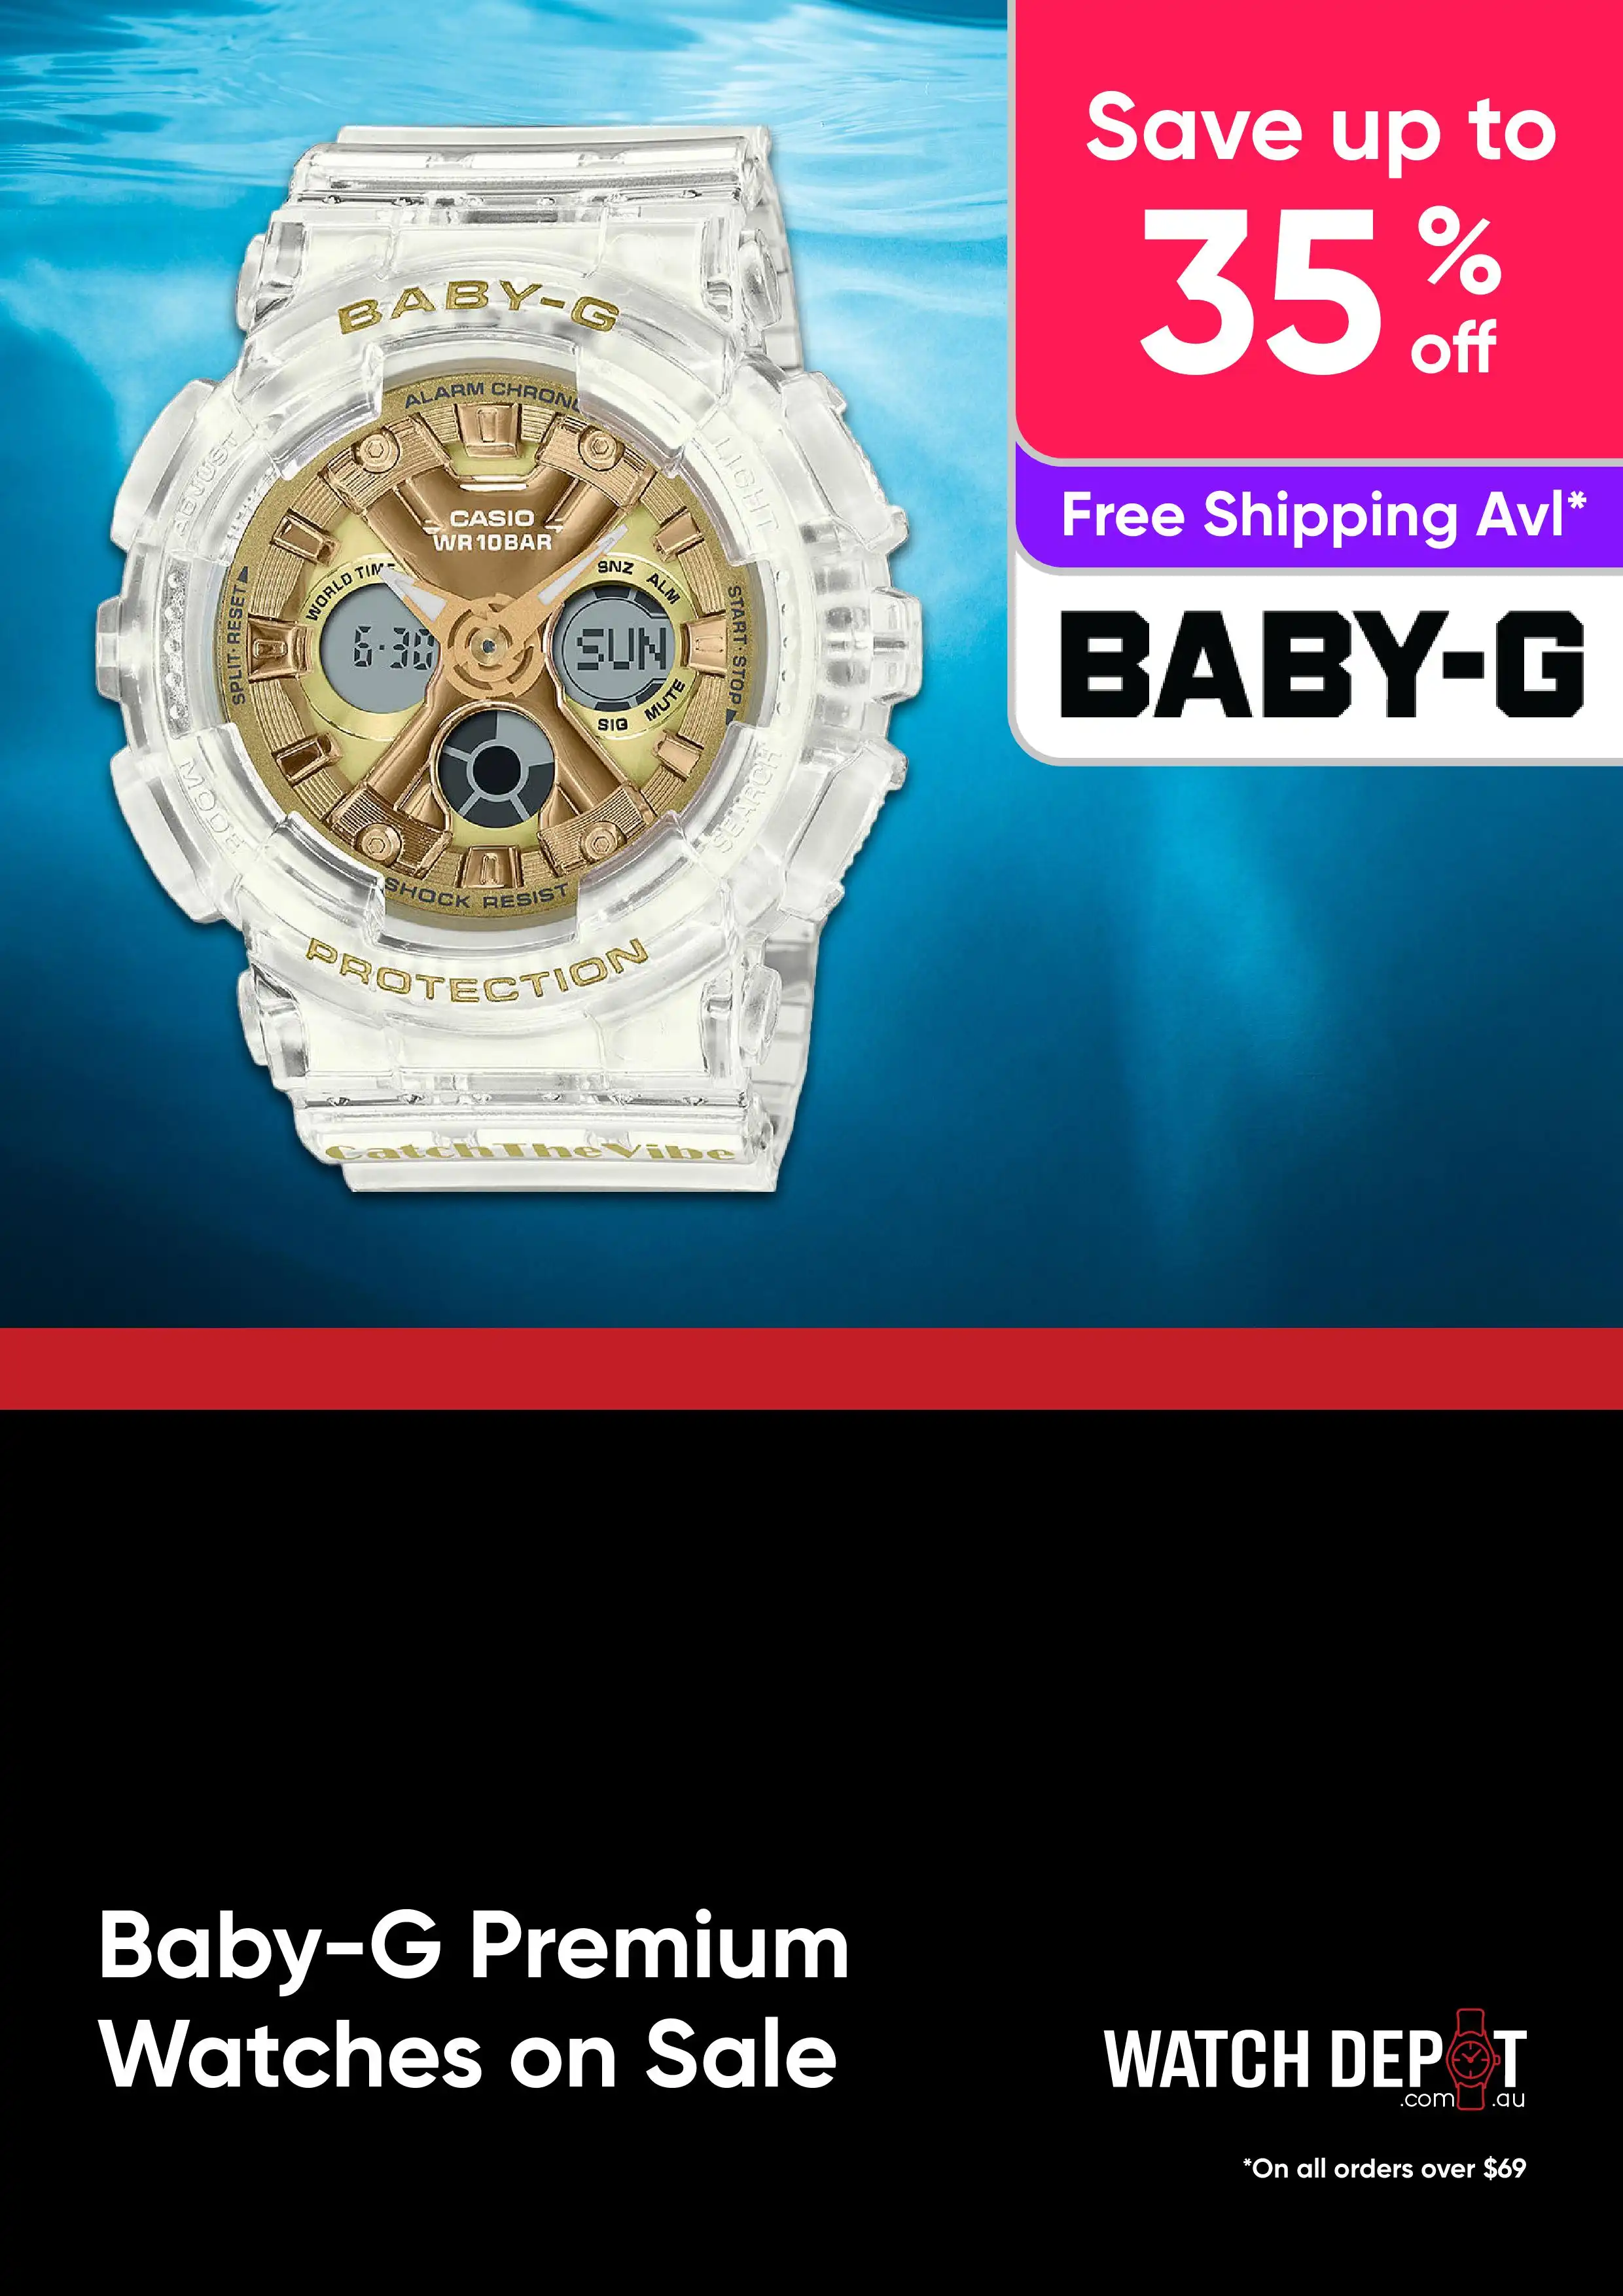 Baby-G Premium Watch Sale - Up to 35% off